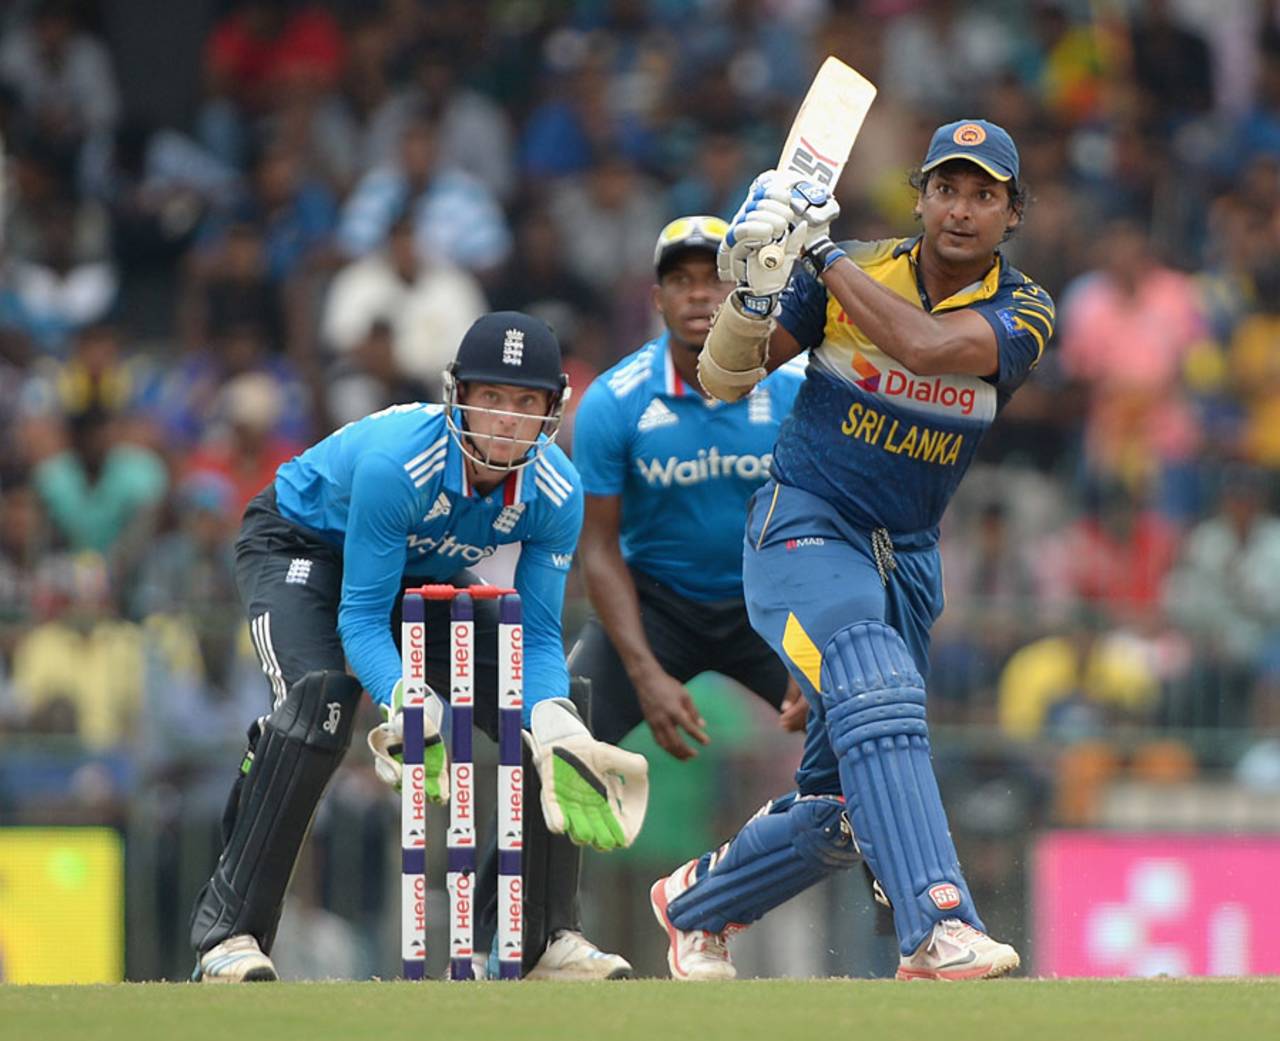 Kumar Sangakkara heaved a catch to midwicket, Sri Lanka v England, 7th ODI, Colombo, December 16, 2014